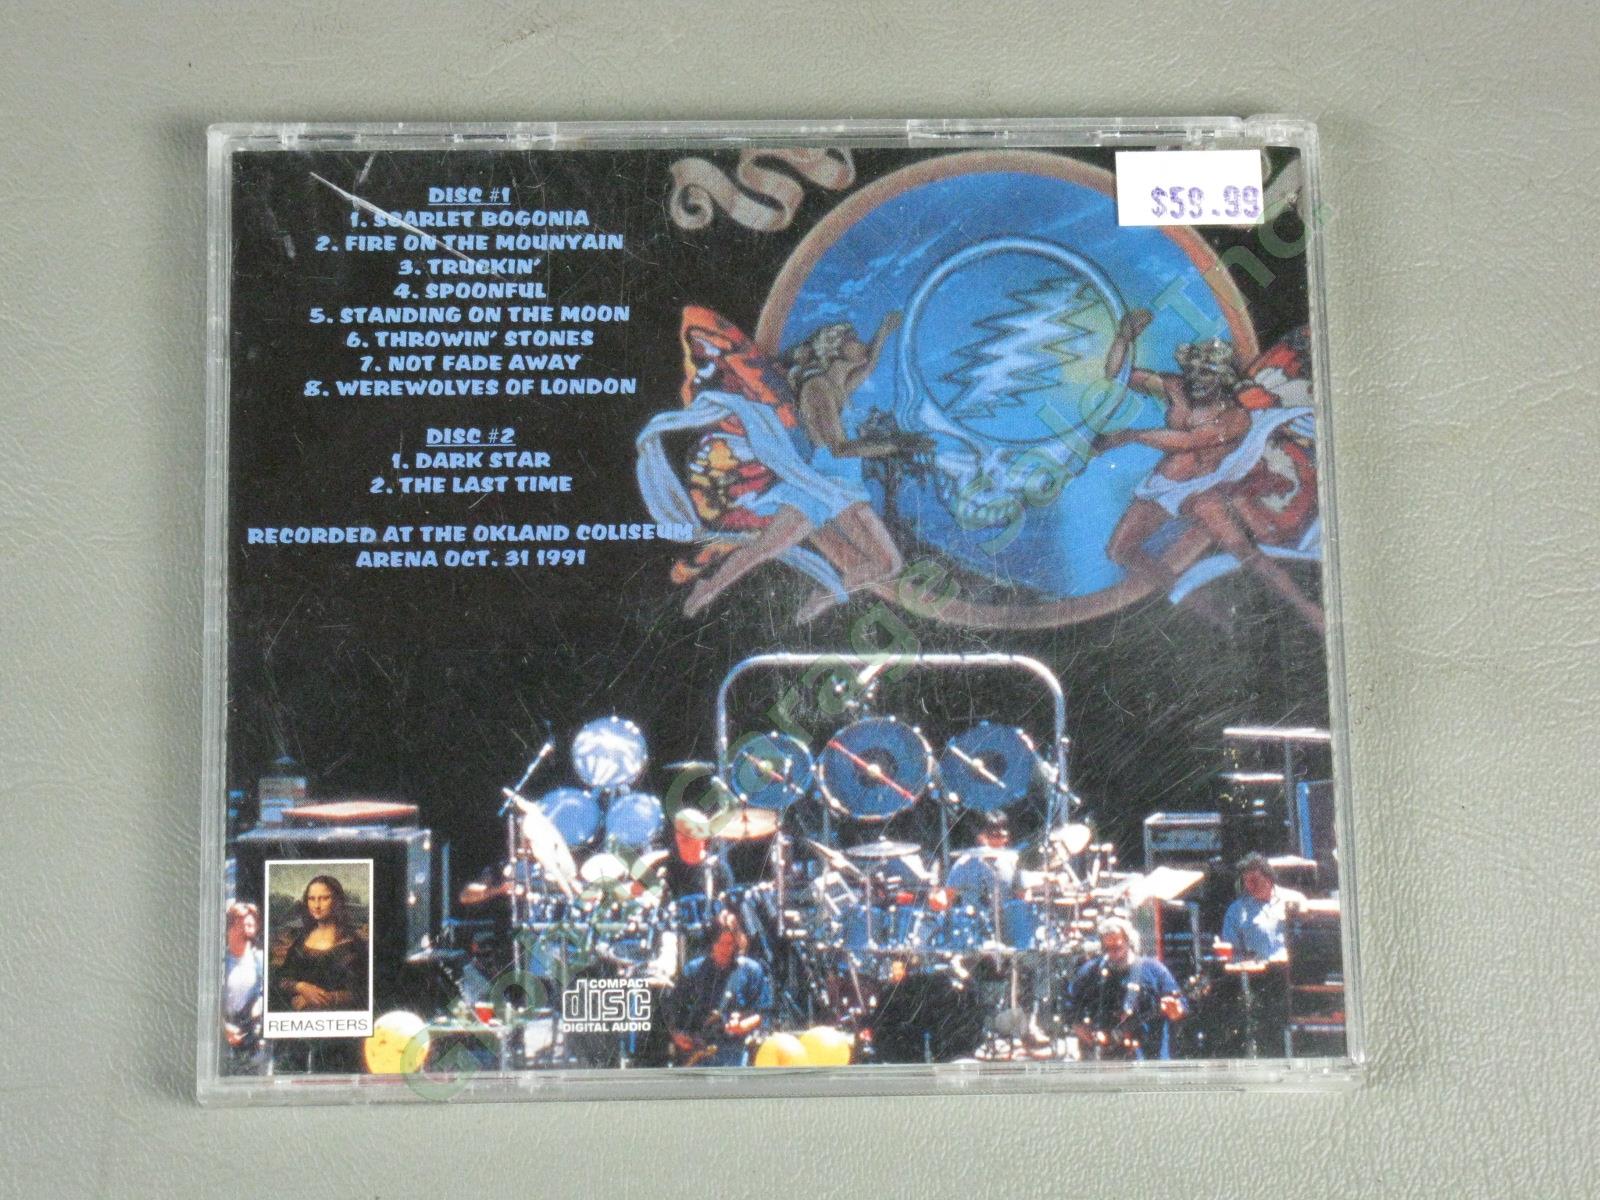 Vtg 1990s Grateful Dead Live Unreleased Show Concert Import CD VHS Lot 16 Discs 4